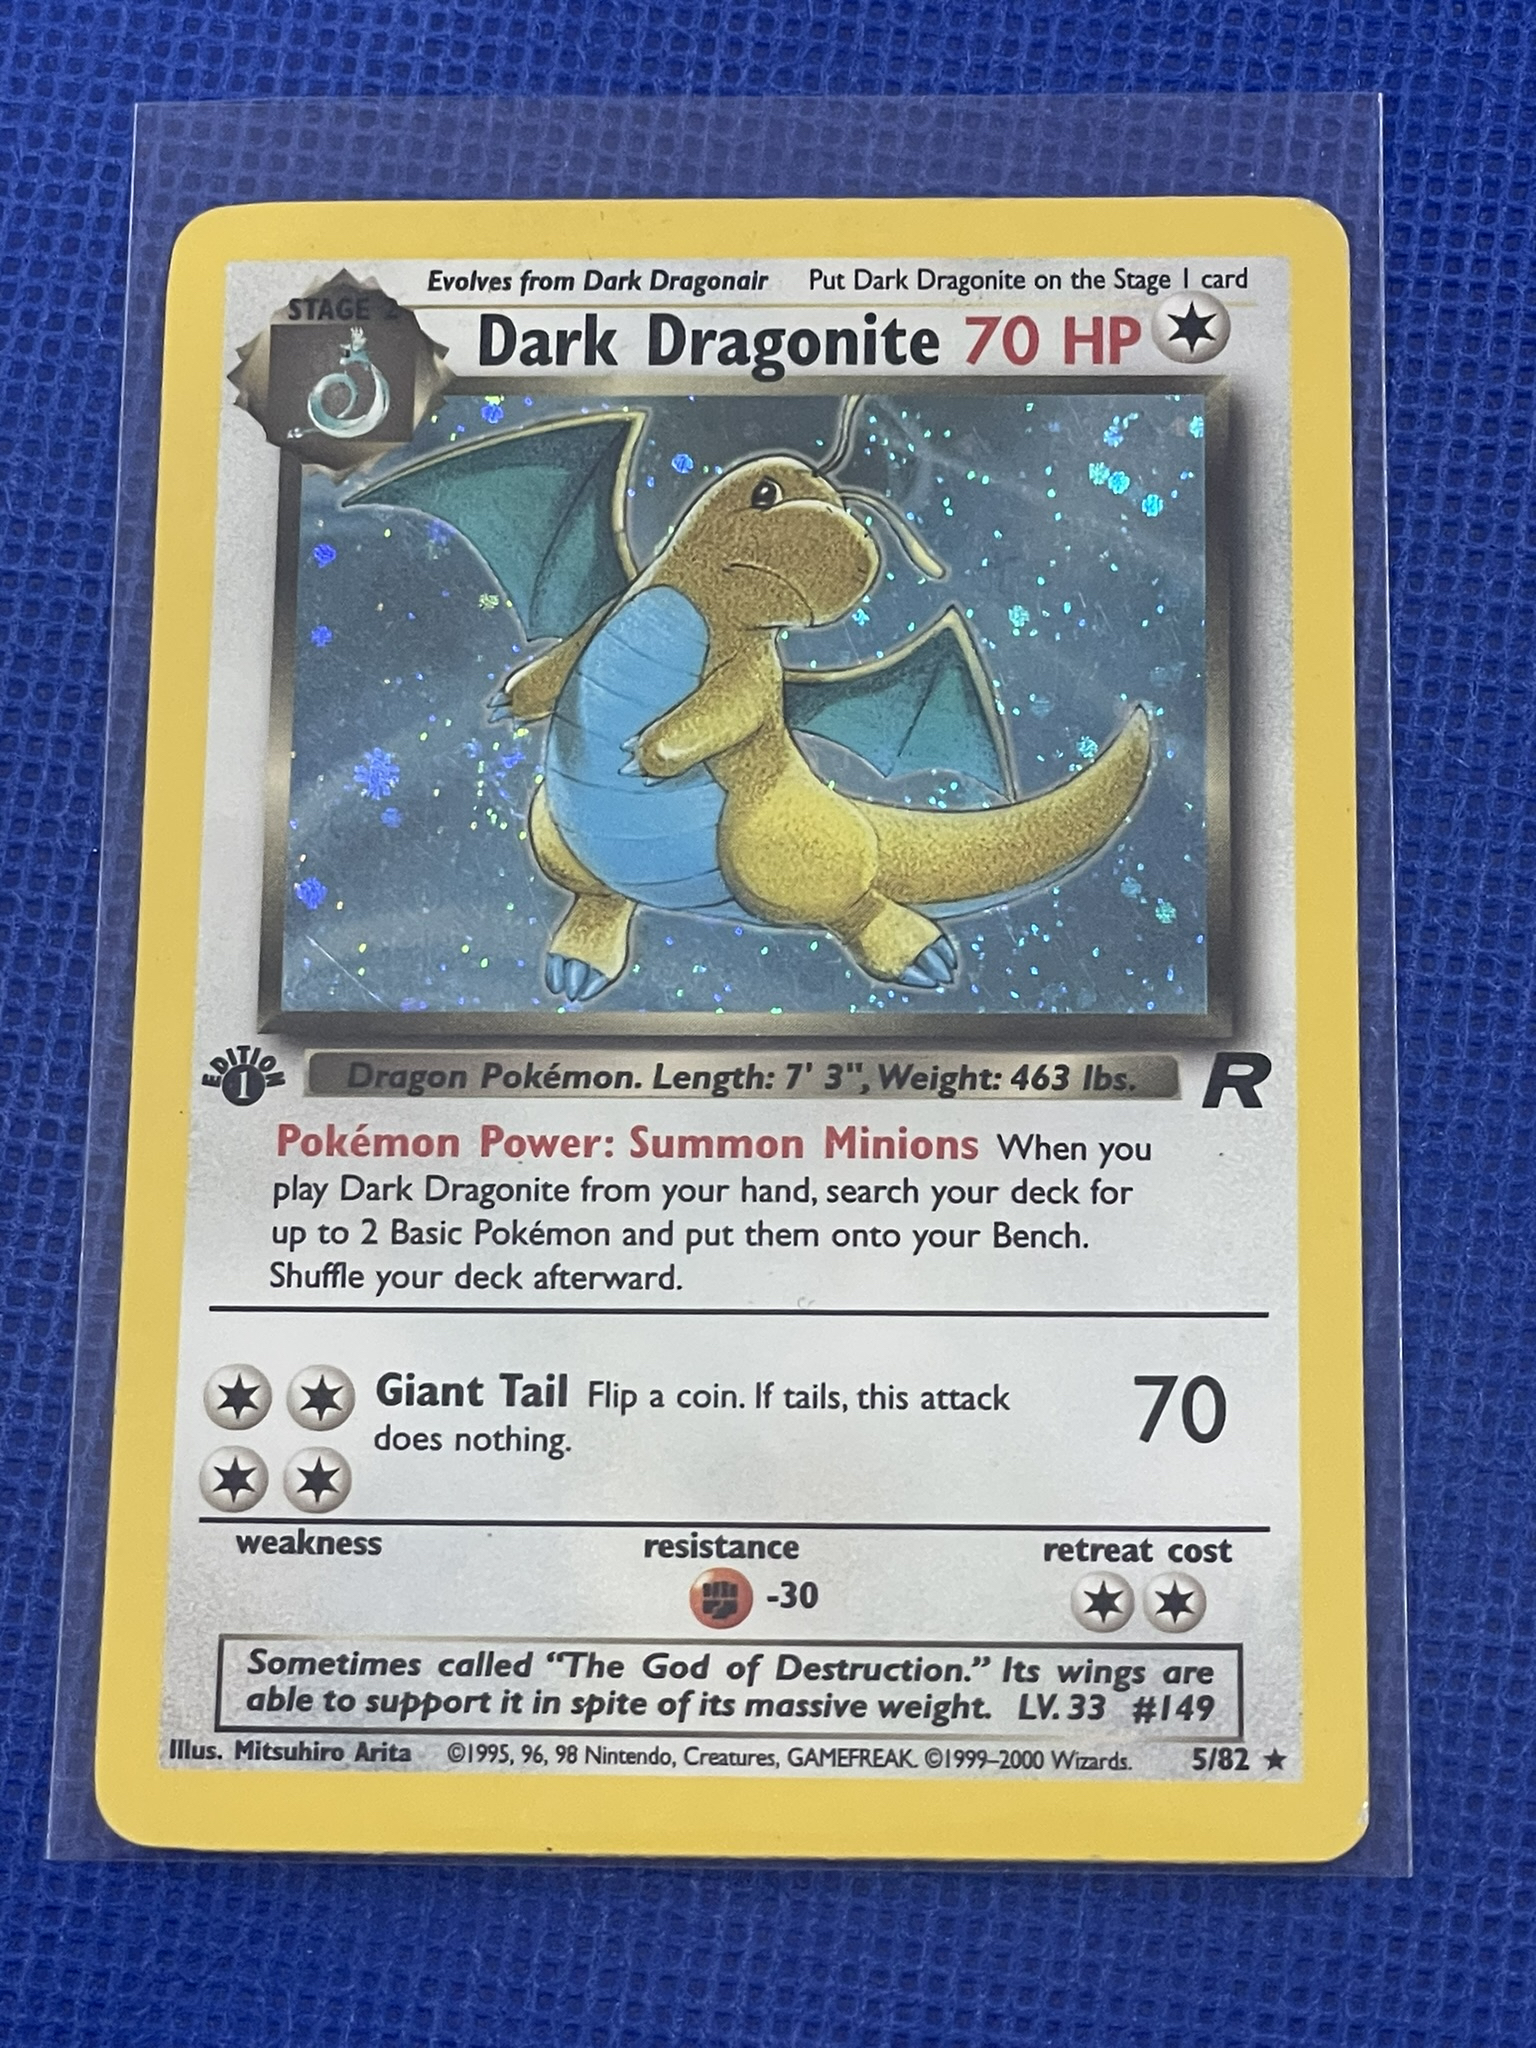 Dark Dragonite PokŽmon holo card, 1999/2000